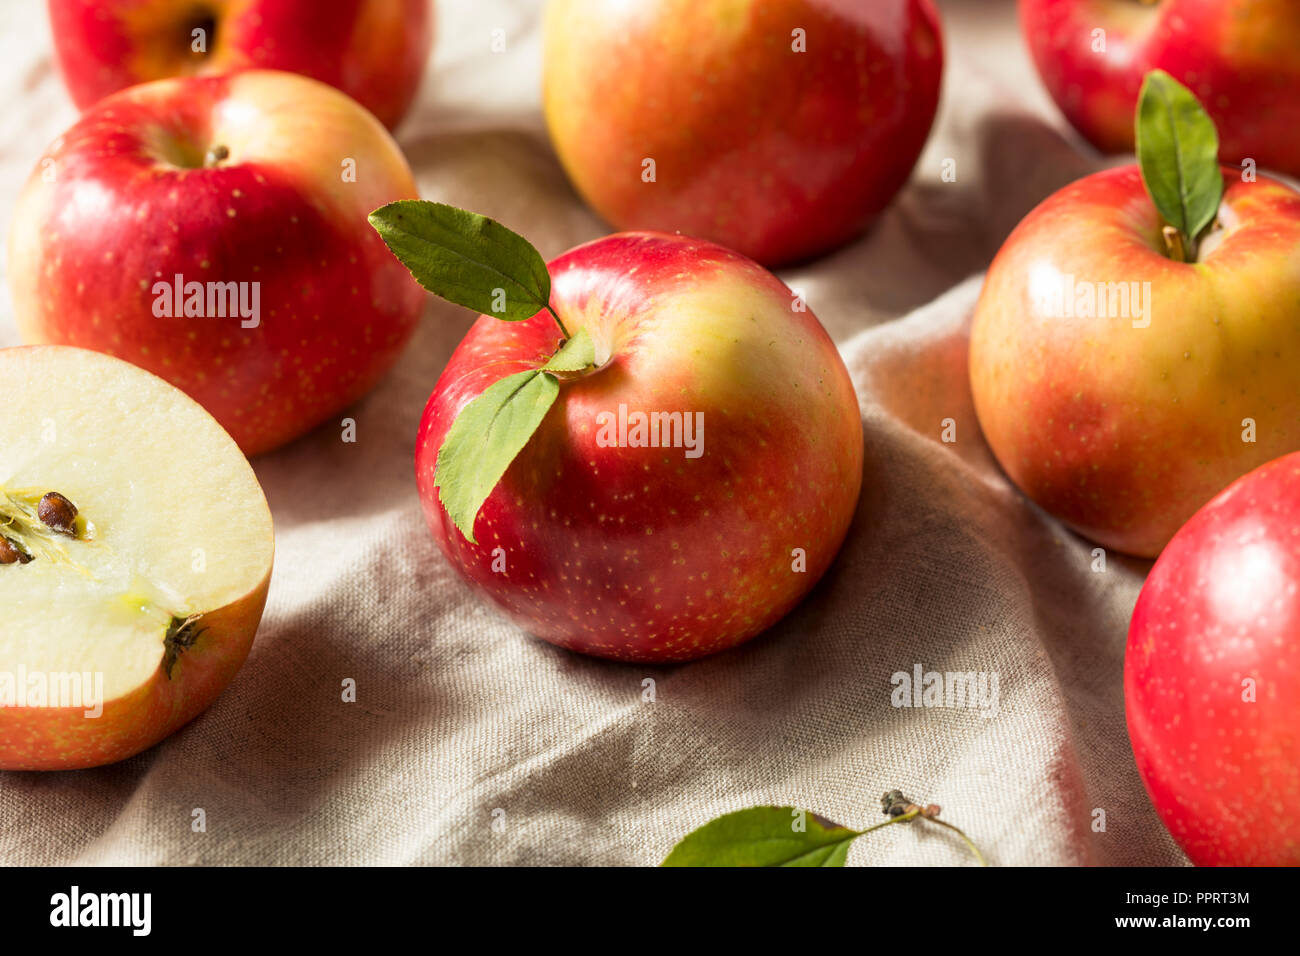 https://c8.alamy.com/comp/PPRT3M/raw-organic-red-apples-ready-to-eat-PPRT3M.jpg